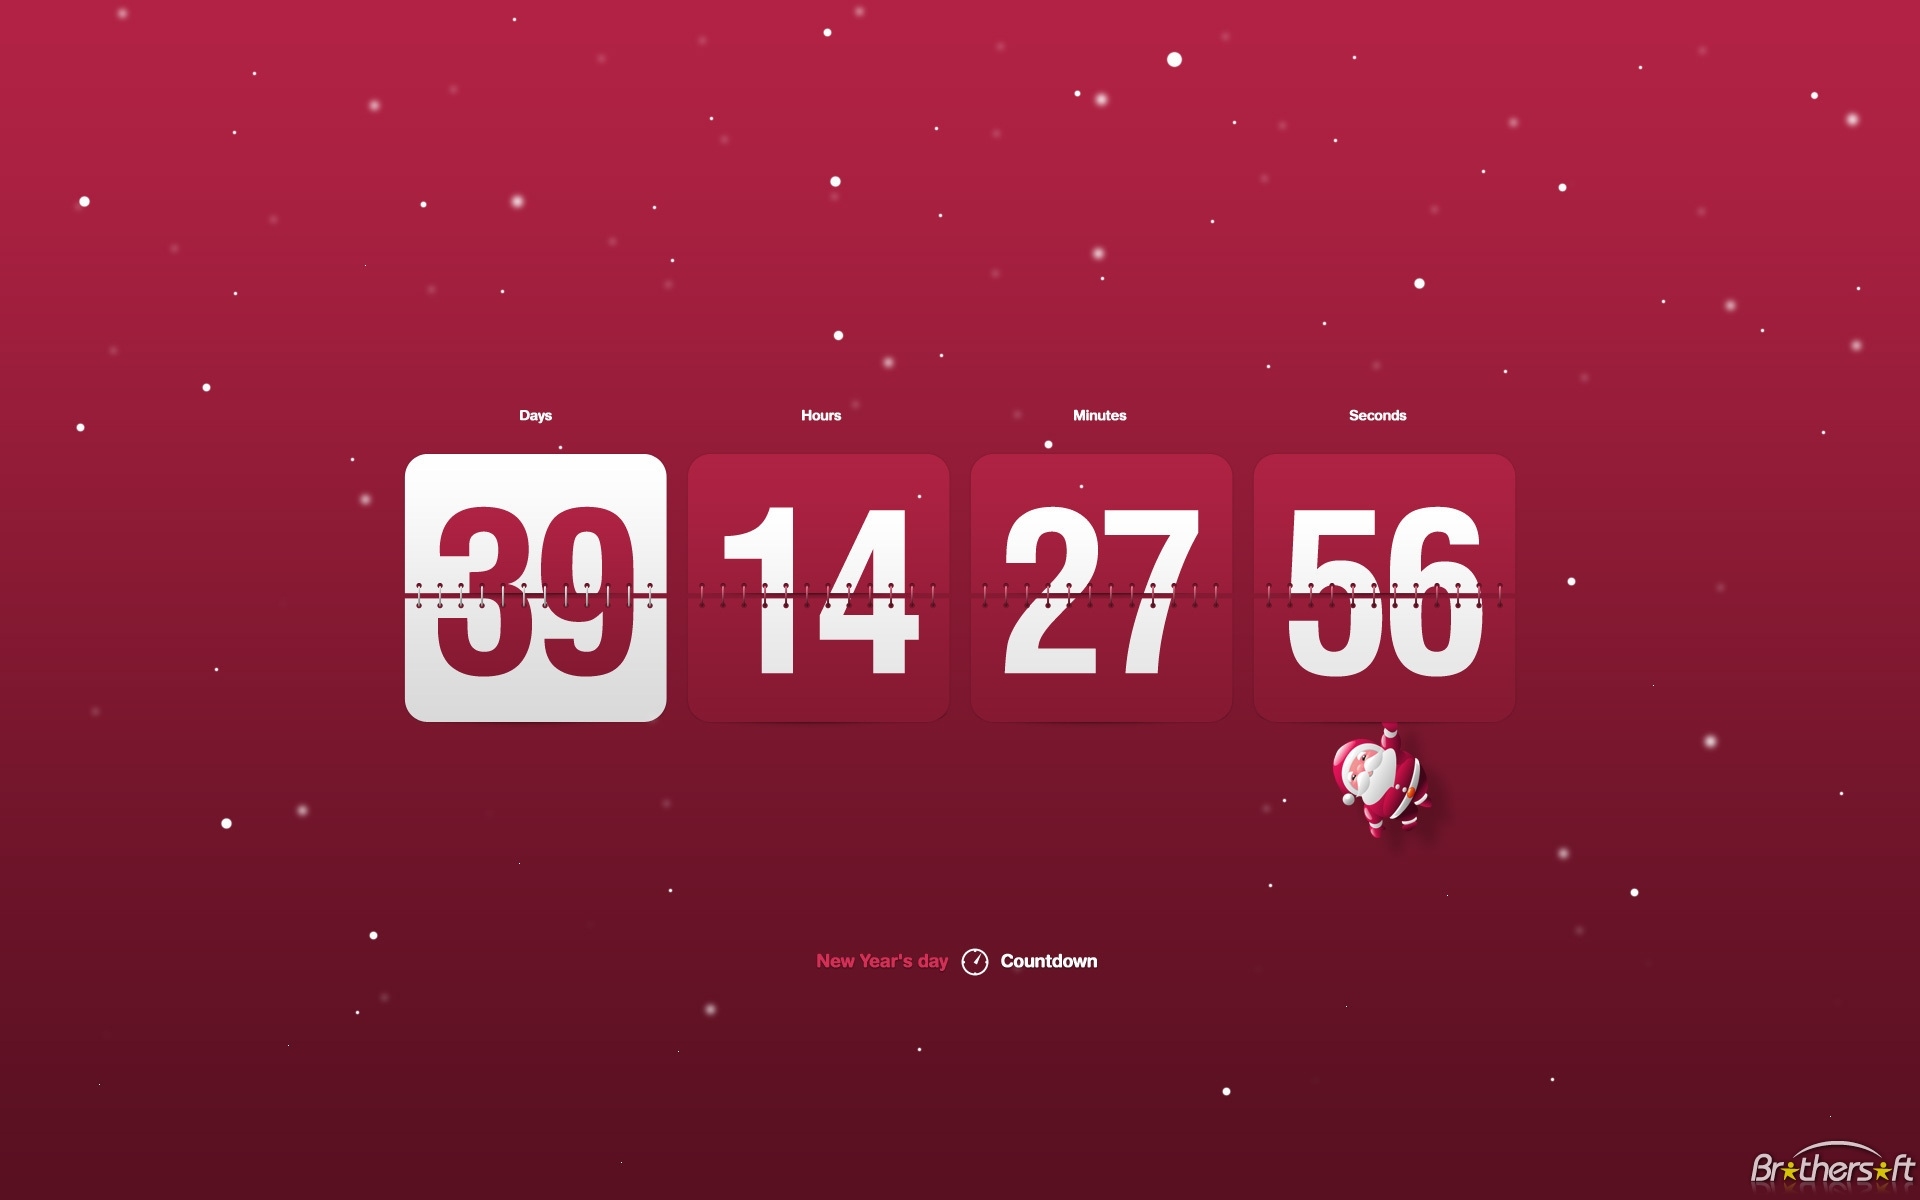 49+] Desktop Wallpaper Countdown Timer On Wallpapersafari Countdown Calendar For Windows 10 Desktop